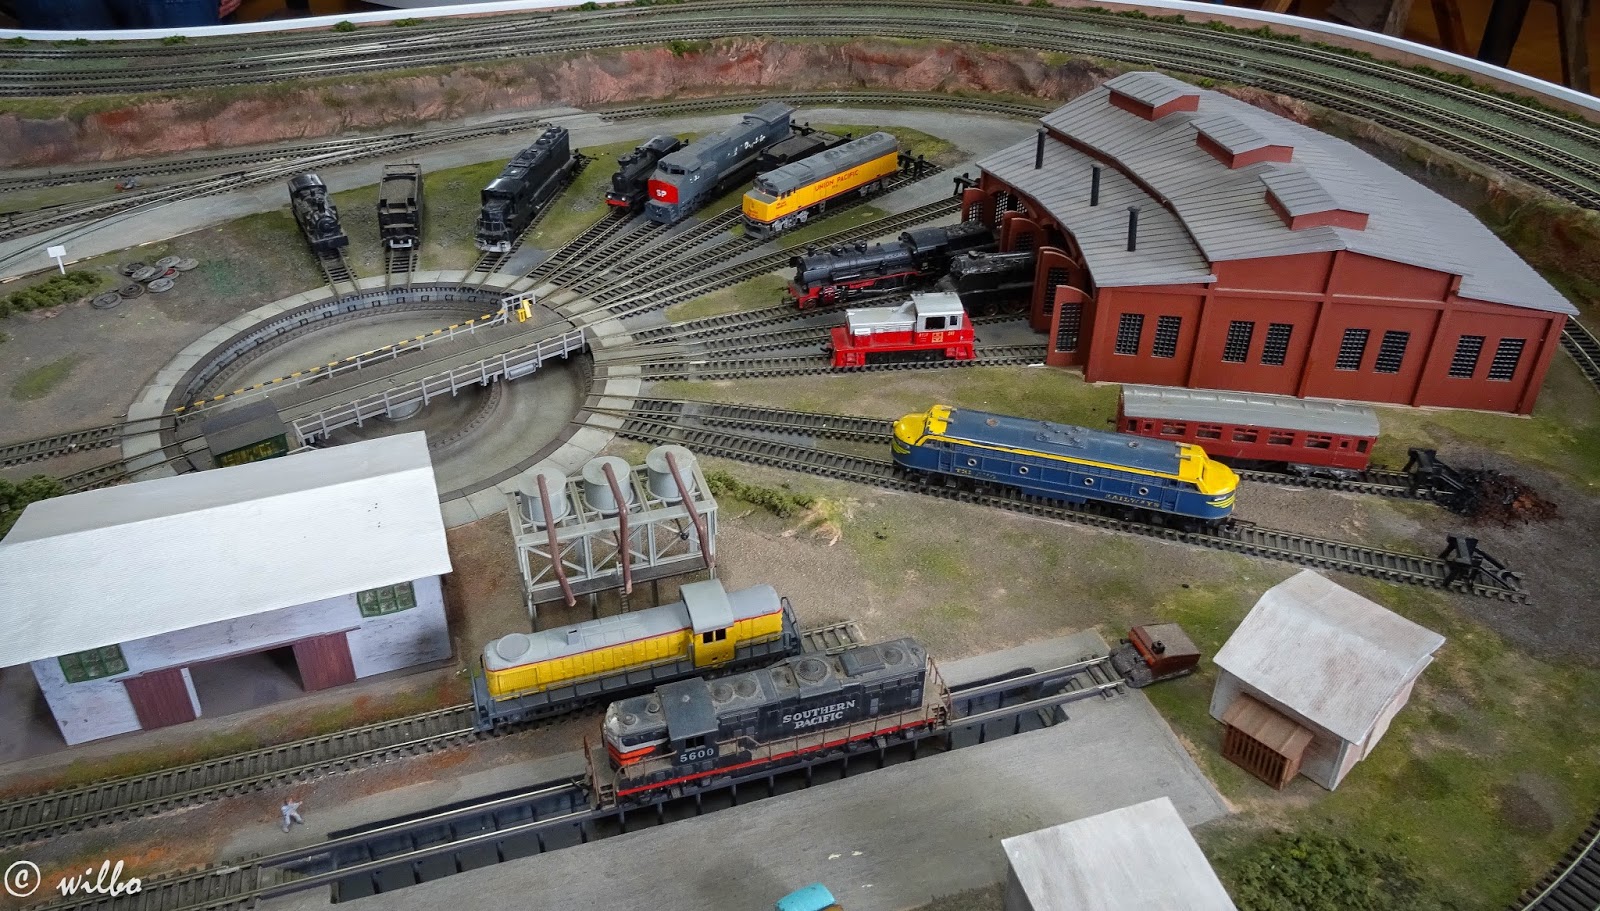 Bill's Ponderings: Model Railway ExpoMy favourite